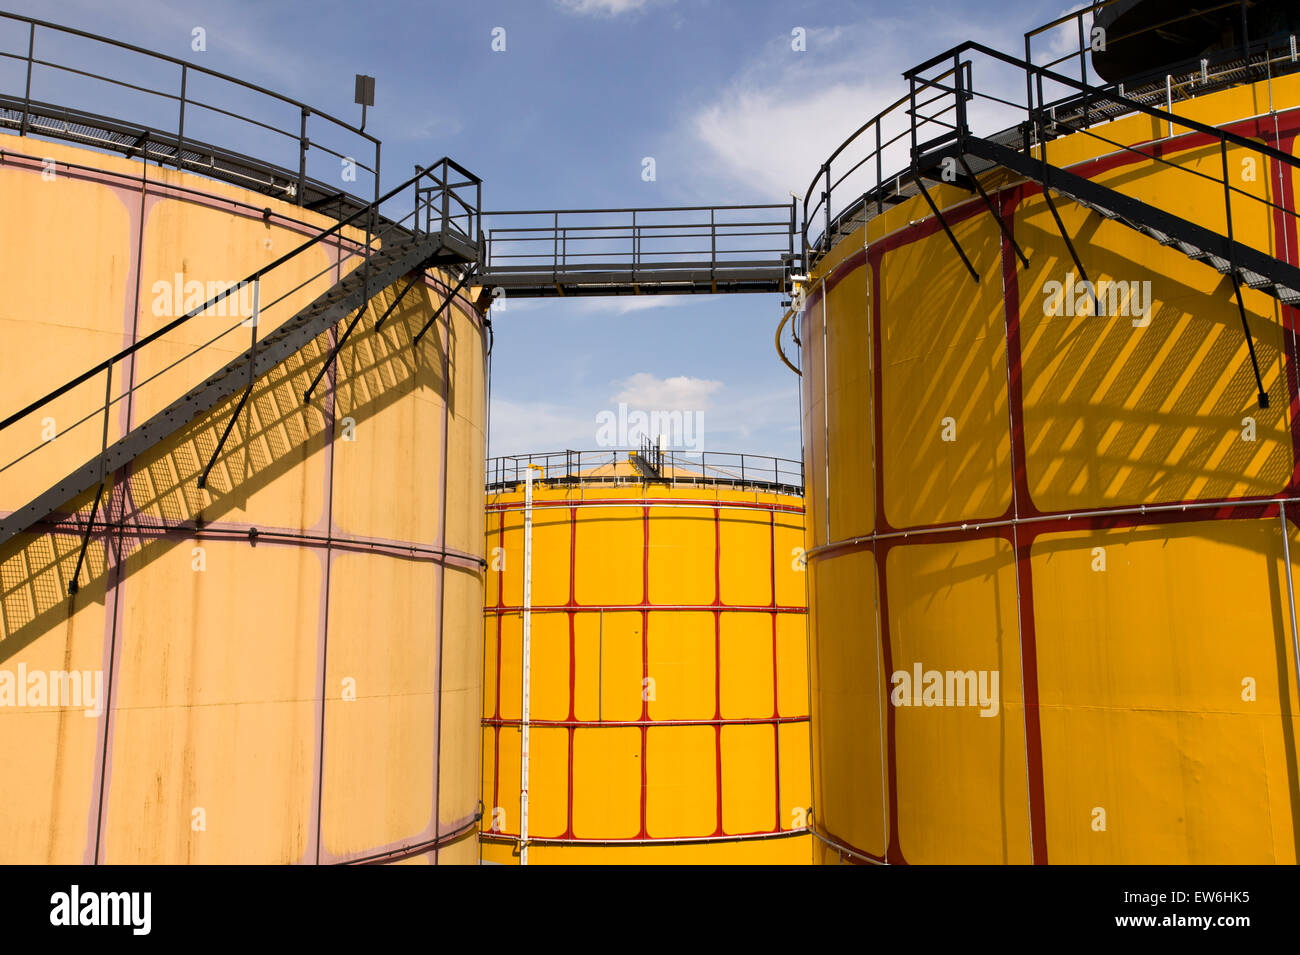 Yellow oil storage tanks painted in the Hundertwasser style in Vienna, Austria. Stock Photo